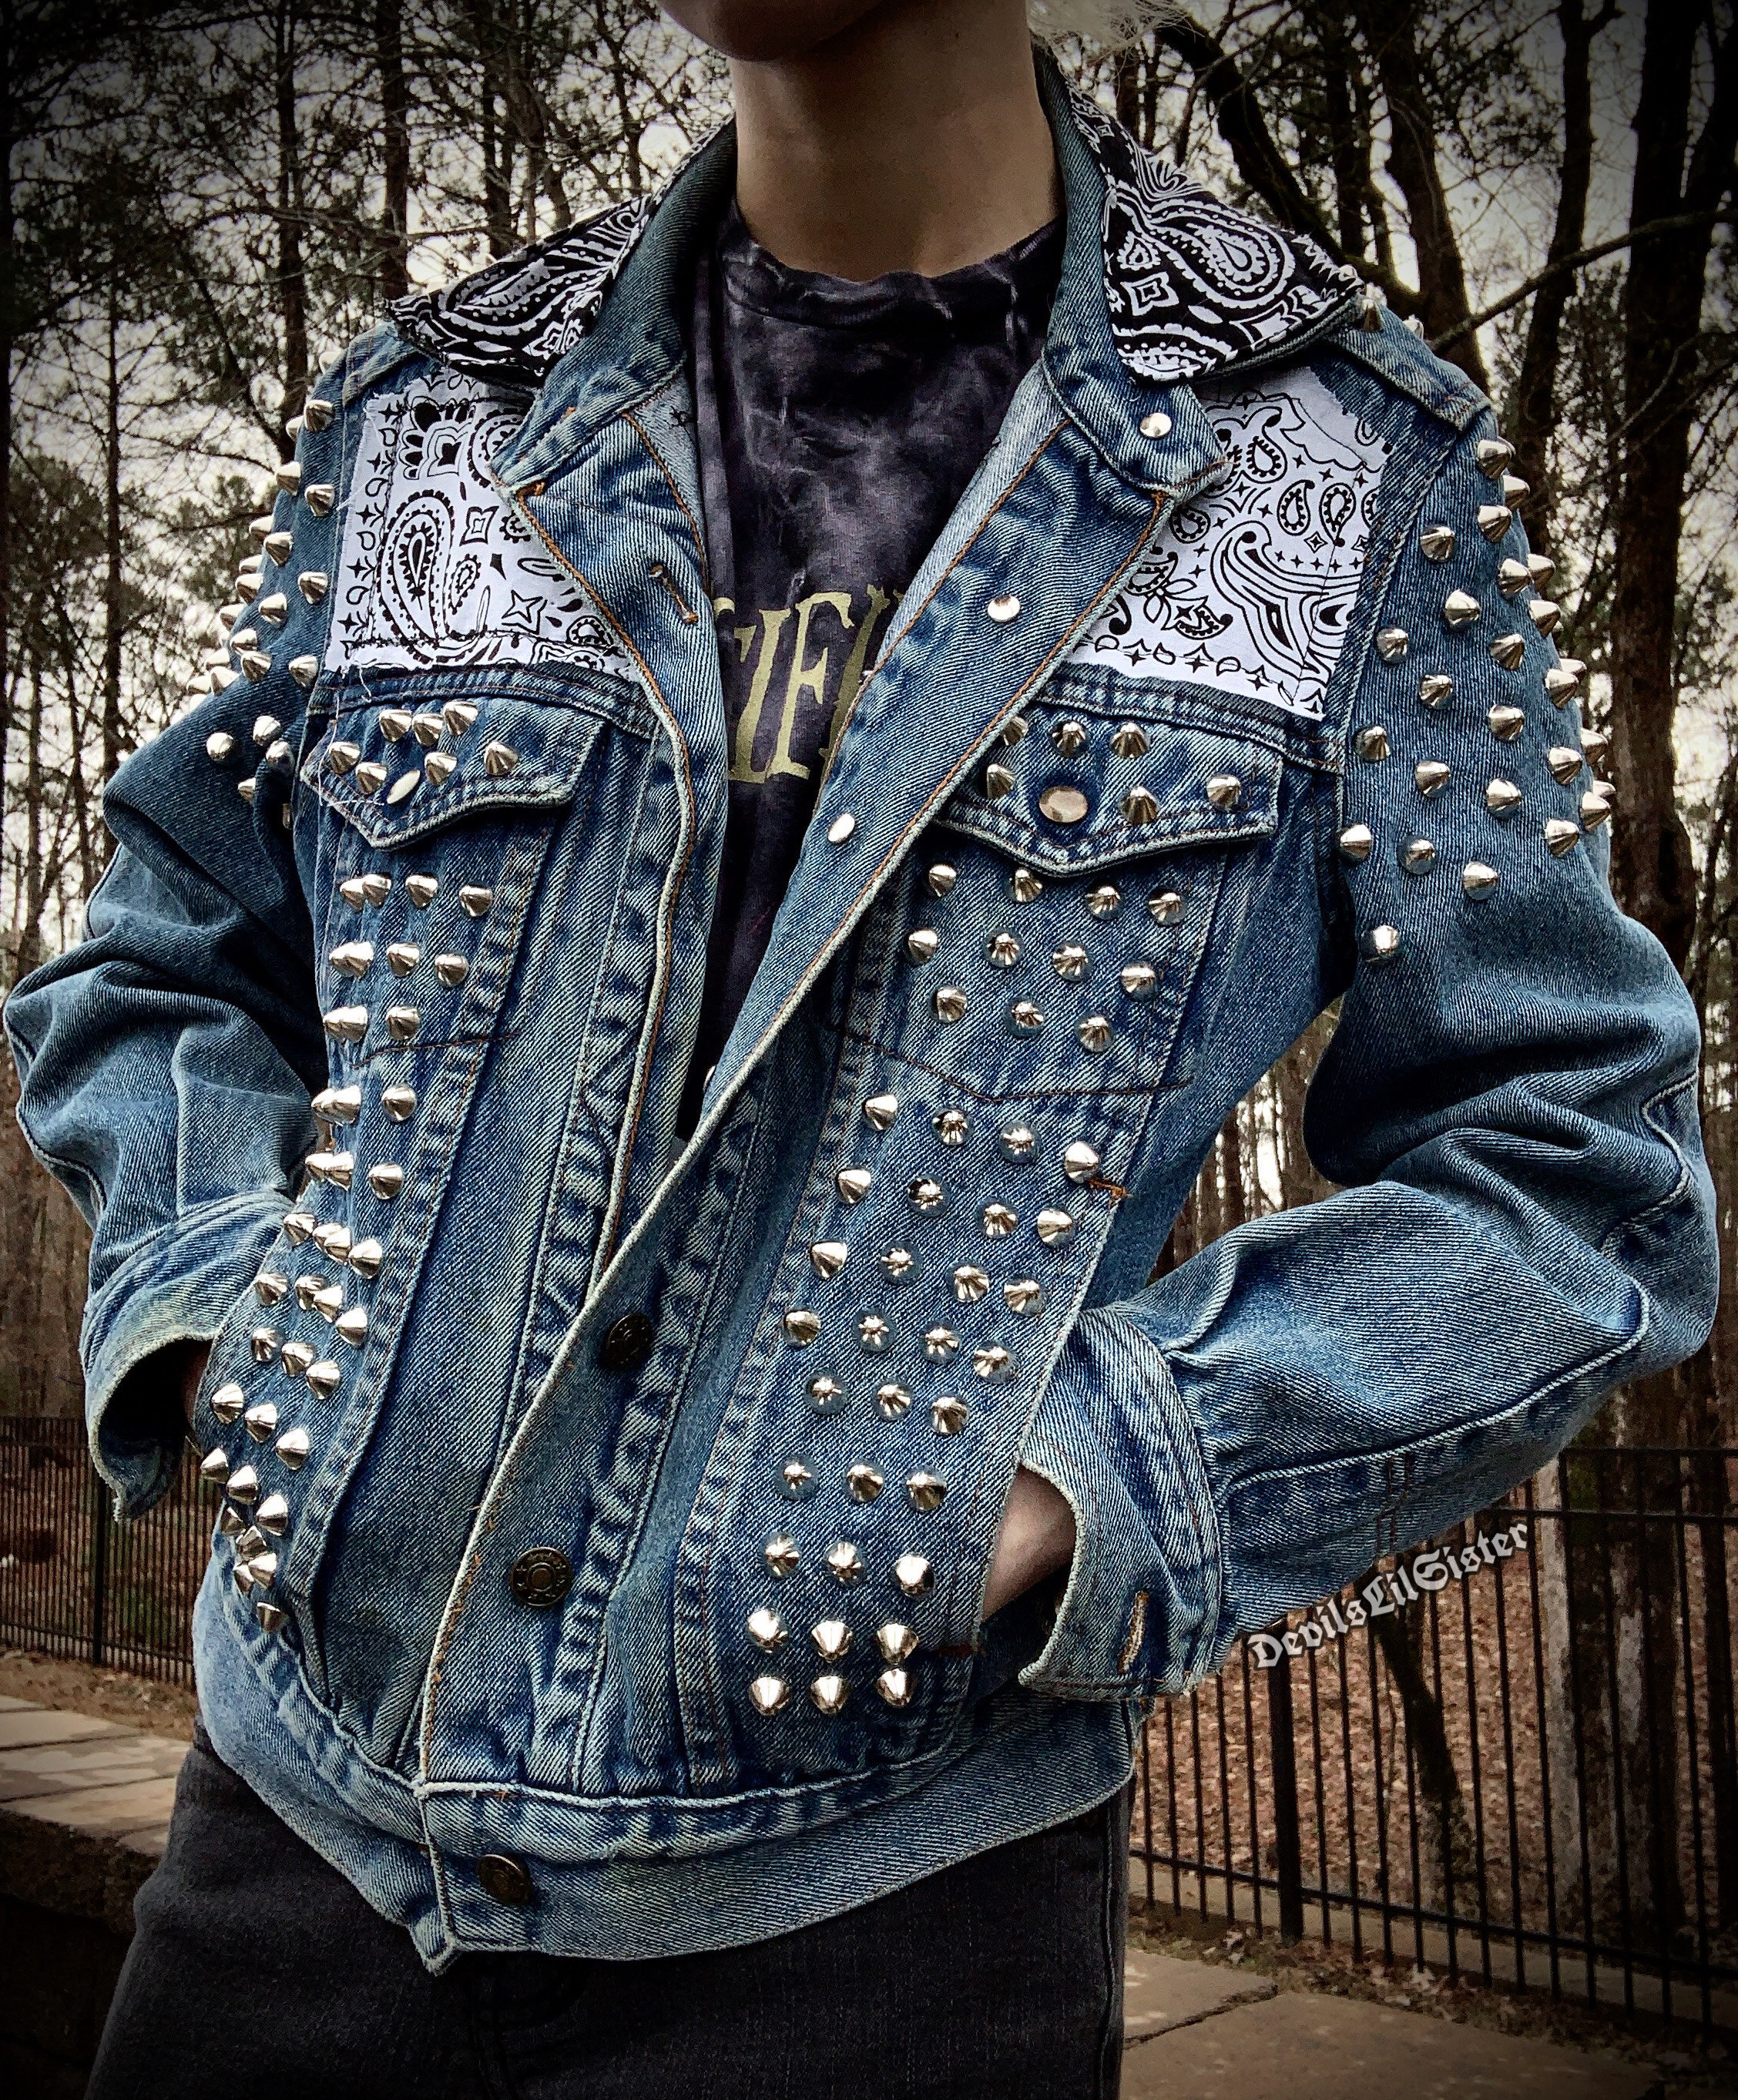 MandiMacabre Custom Punk Studded Spiked Painted Jacket | Leather/Denim | Official Website in Description